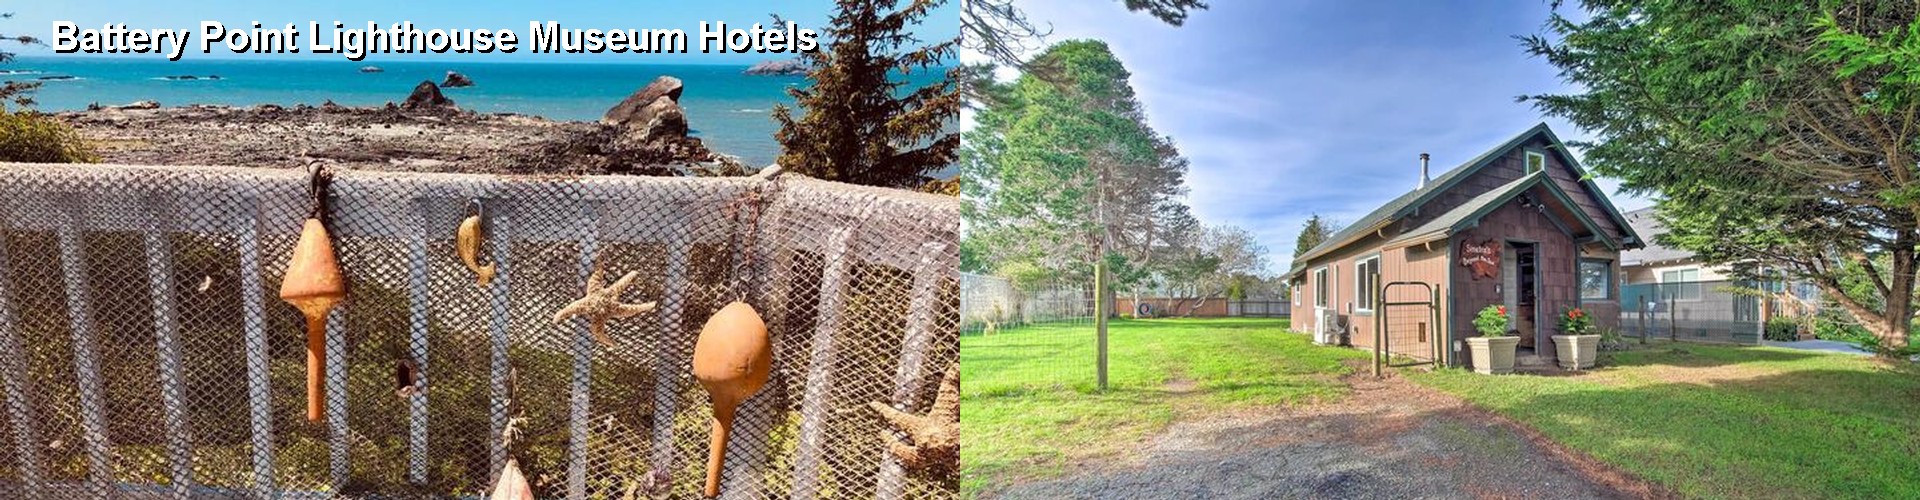 4 Best Hotels near Battery Point Lighthouse Museum